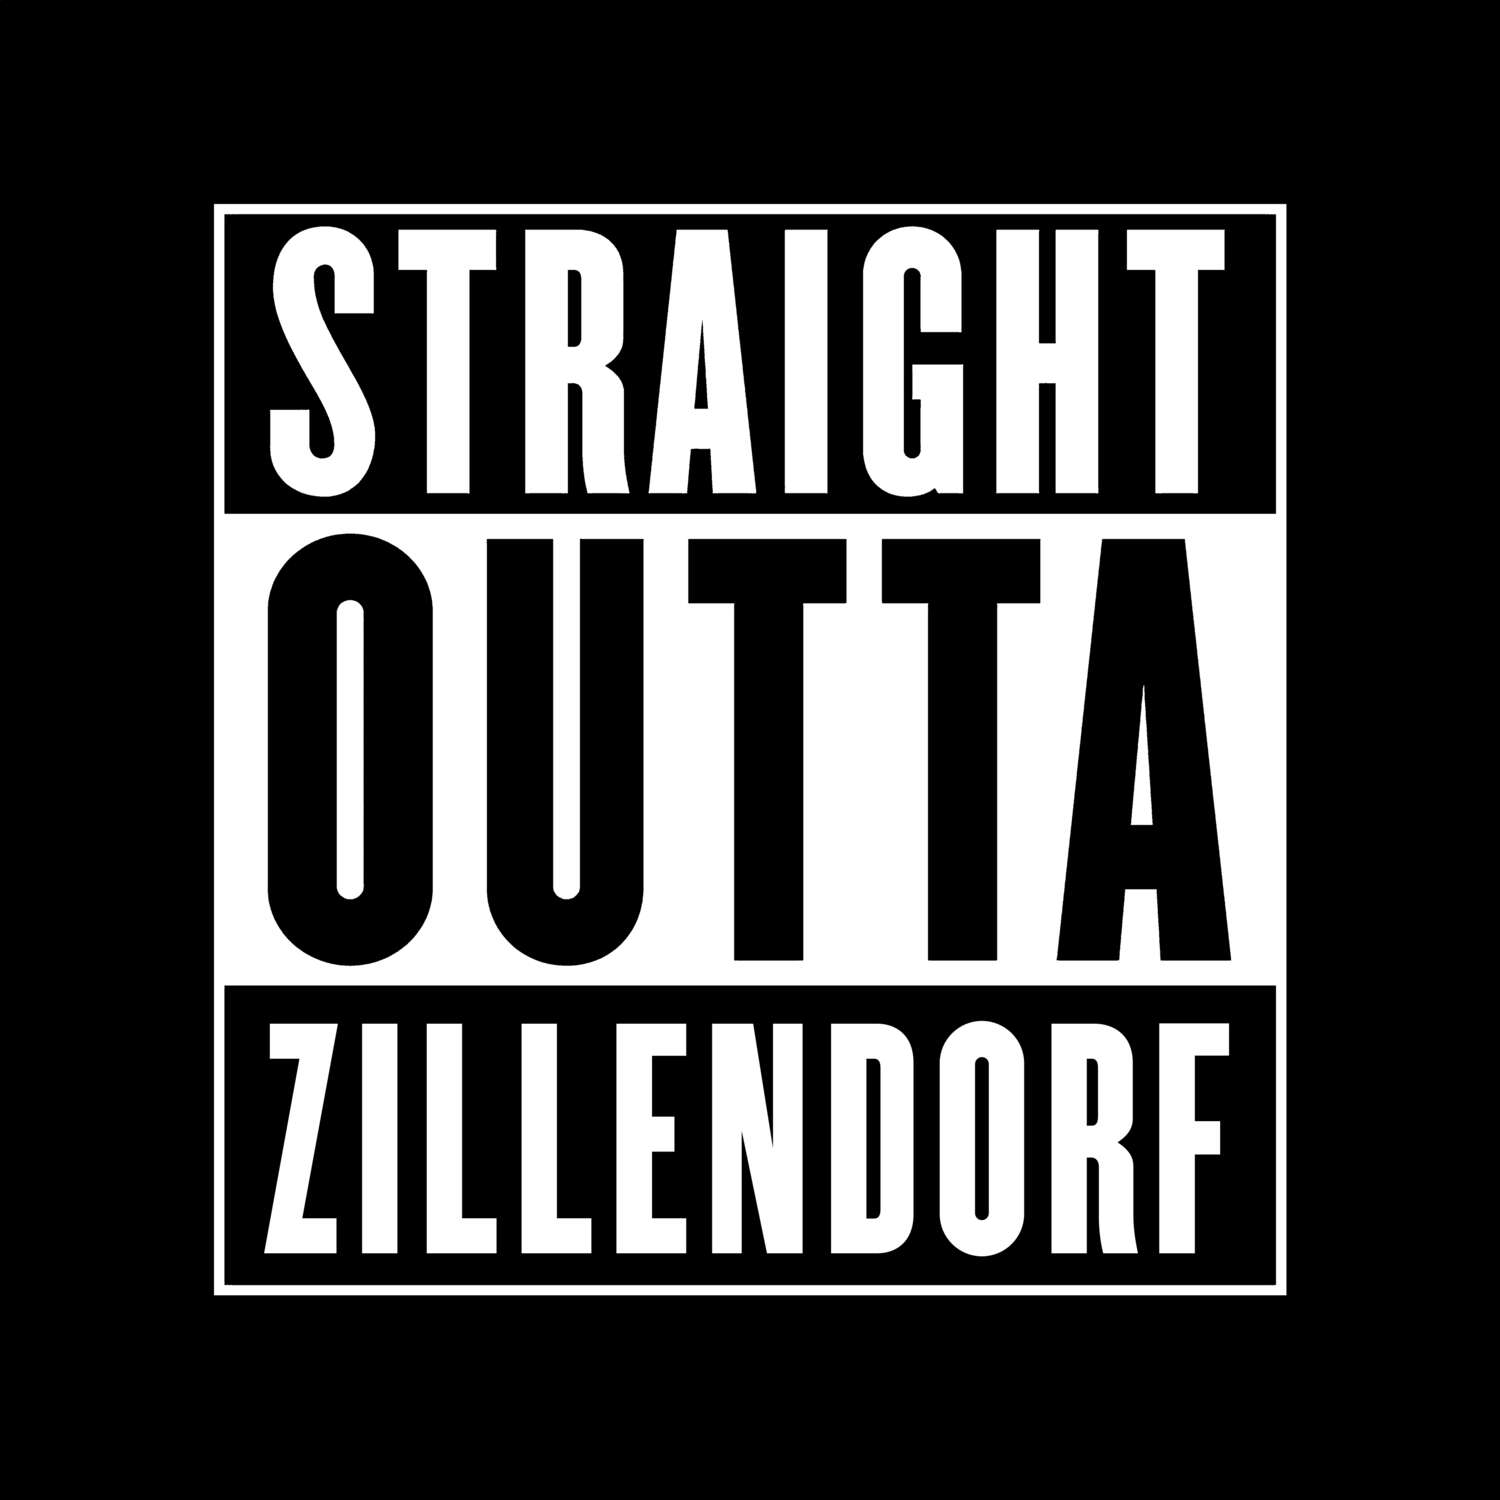 Zillendorf T-Shirt »Straight Outta«